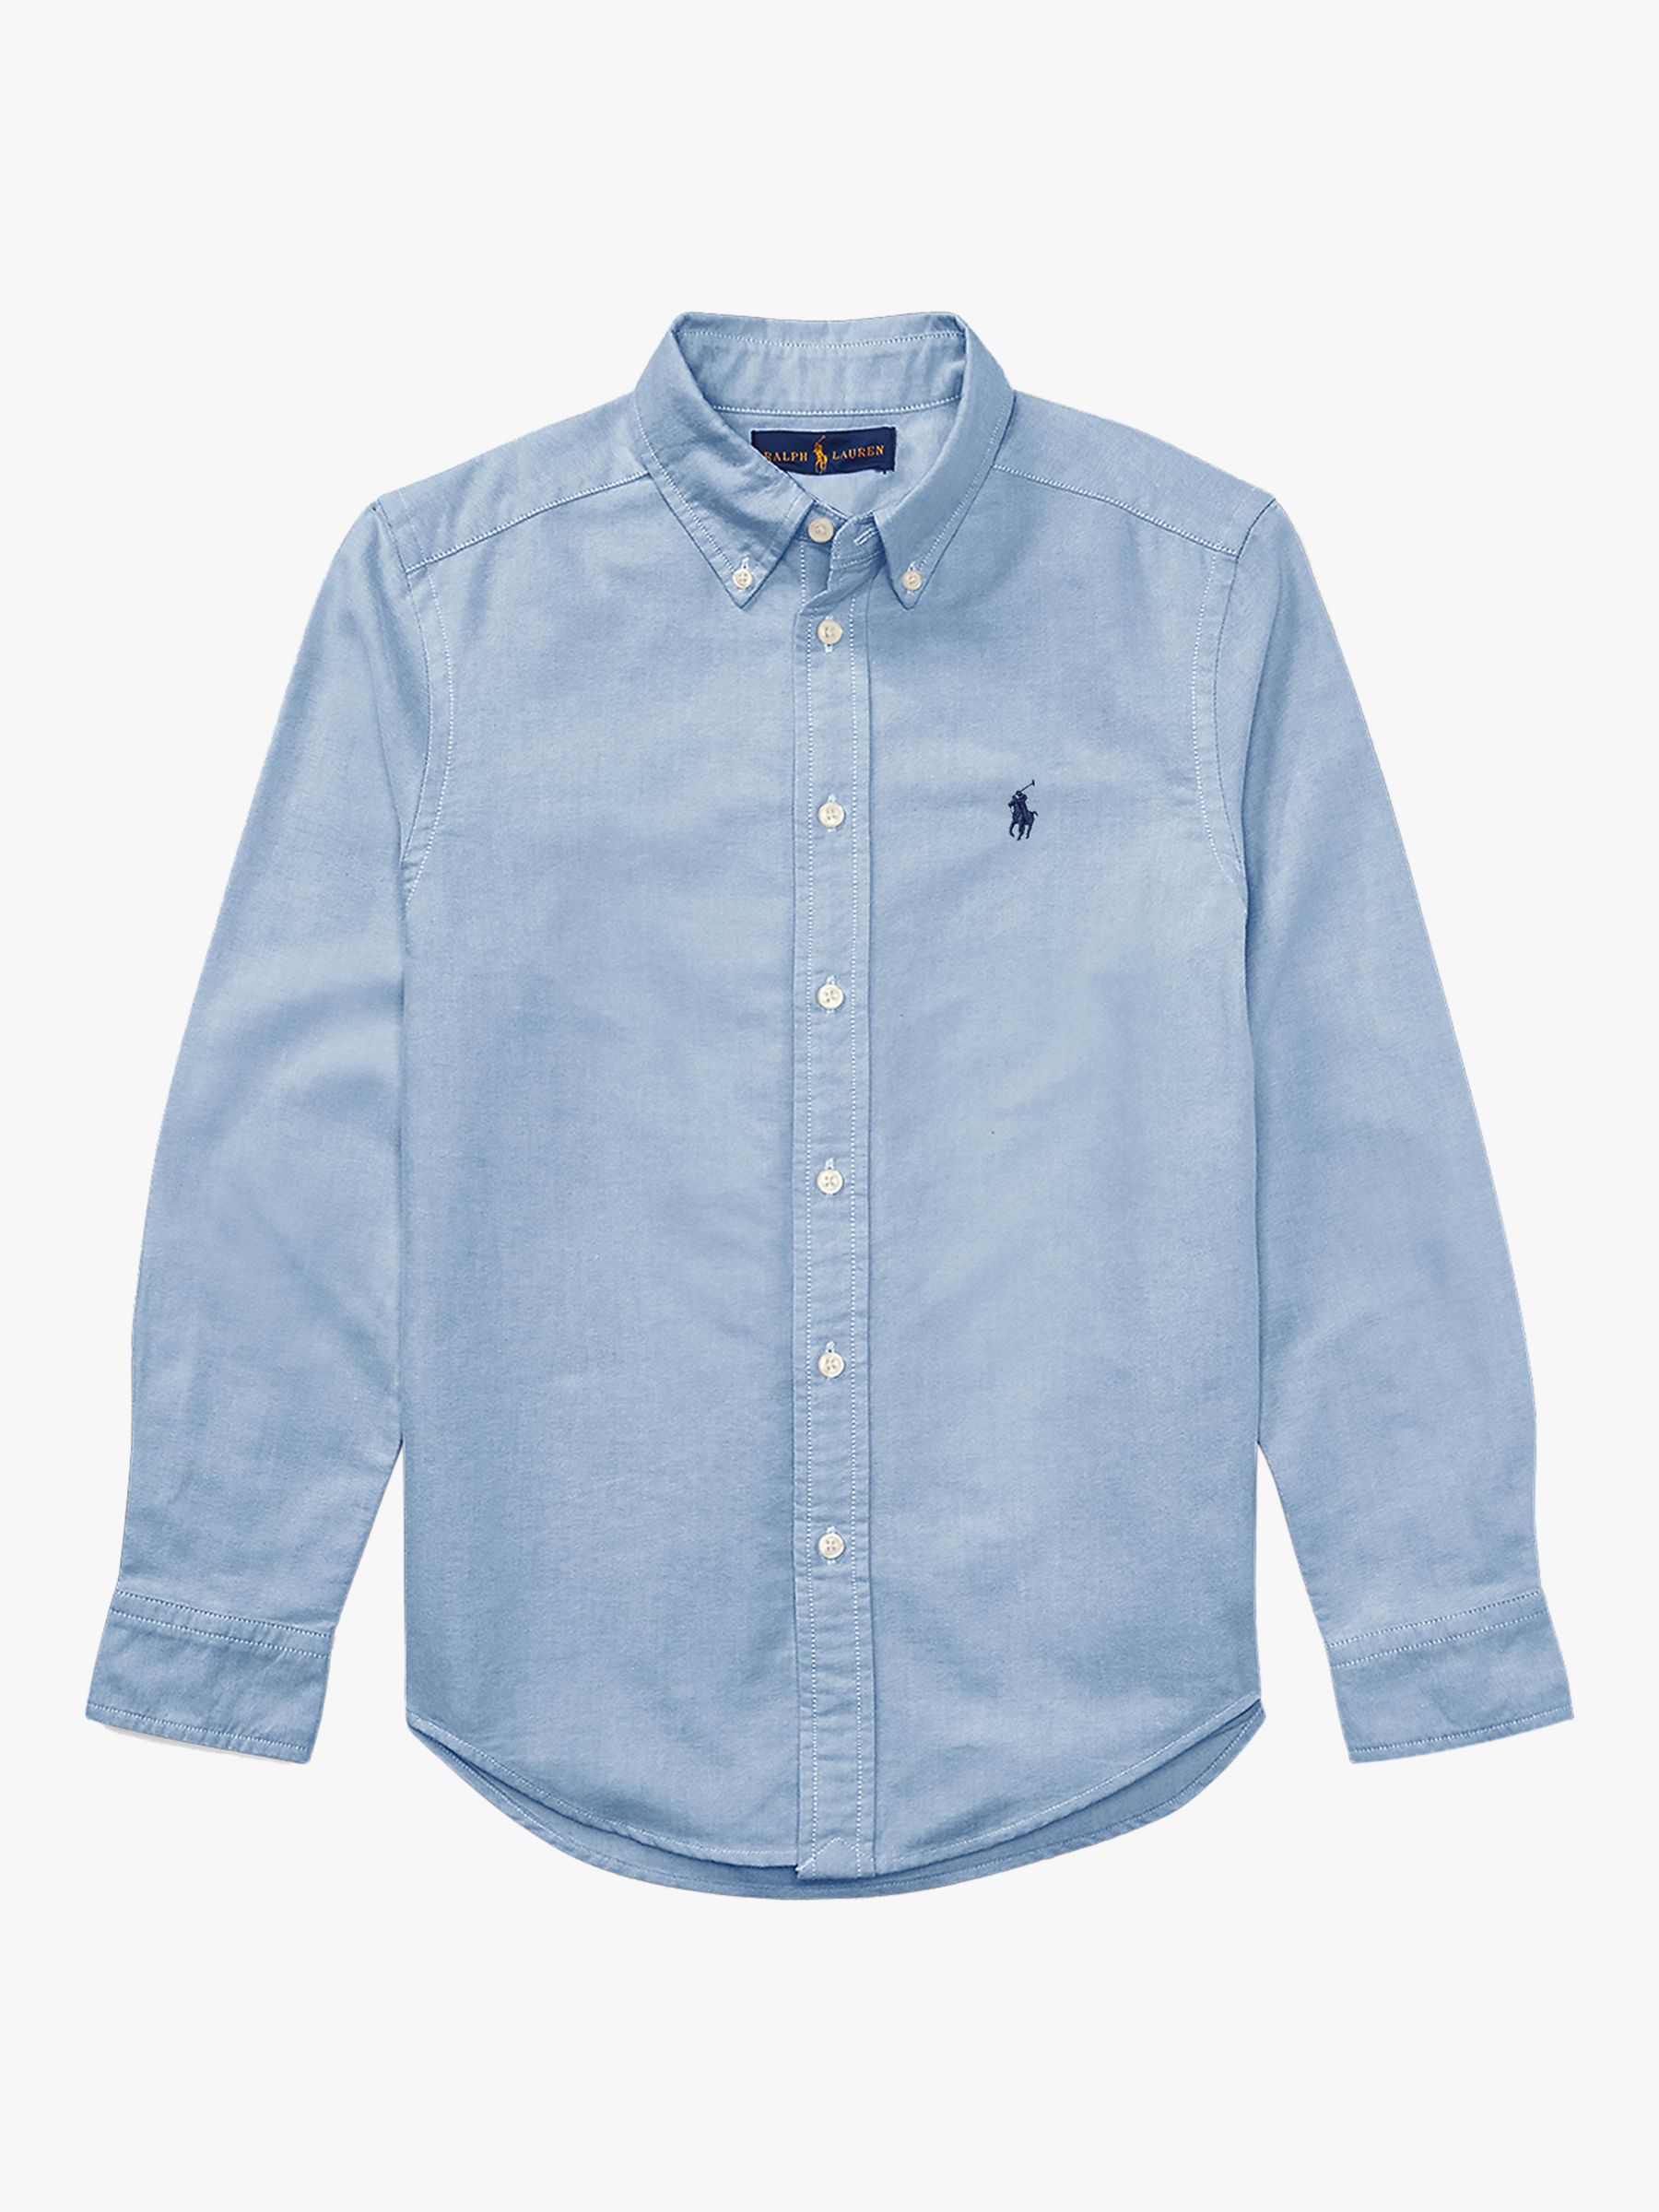 Polo Ralph Lauren Kids' Oxford Shirt, Blue, 5 years